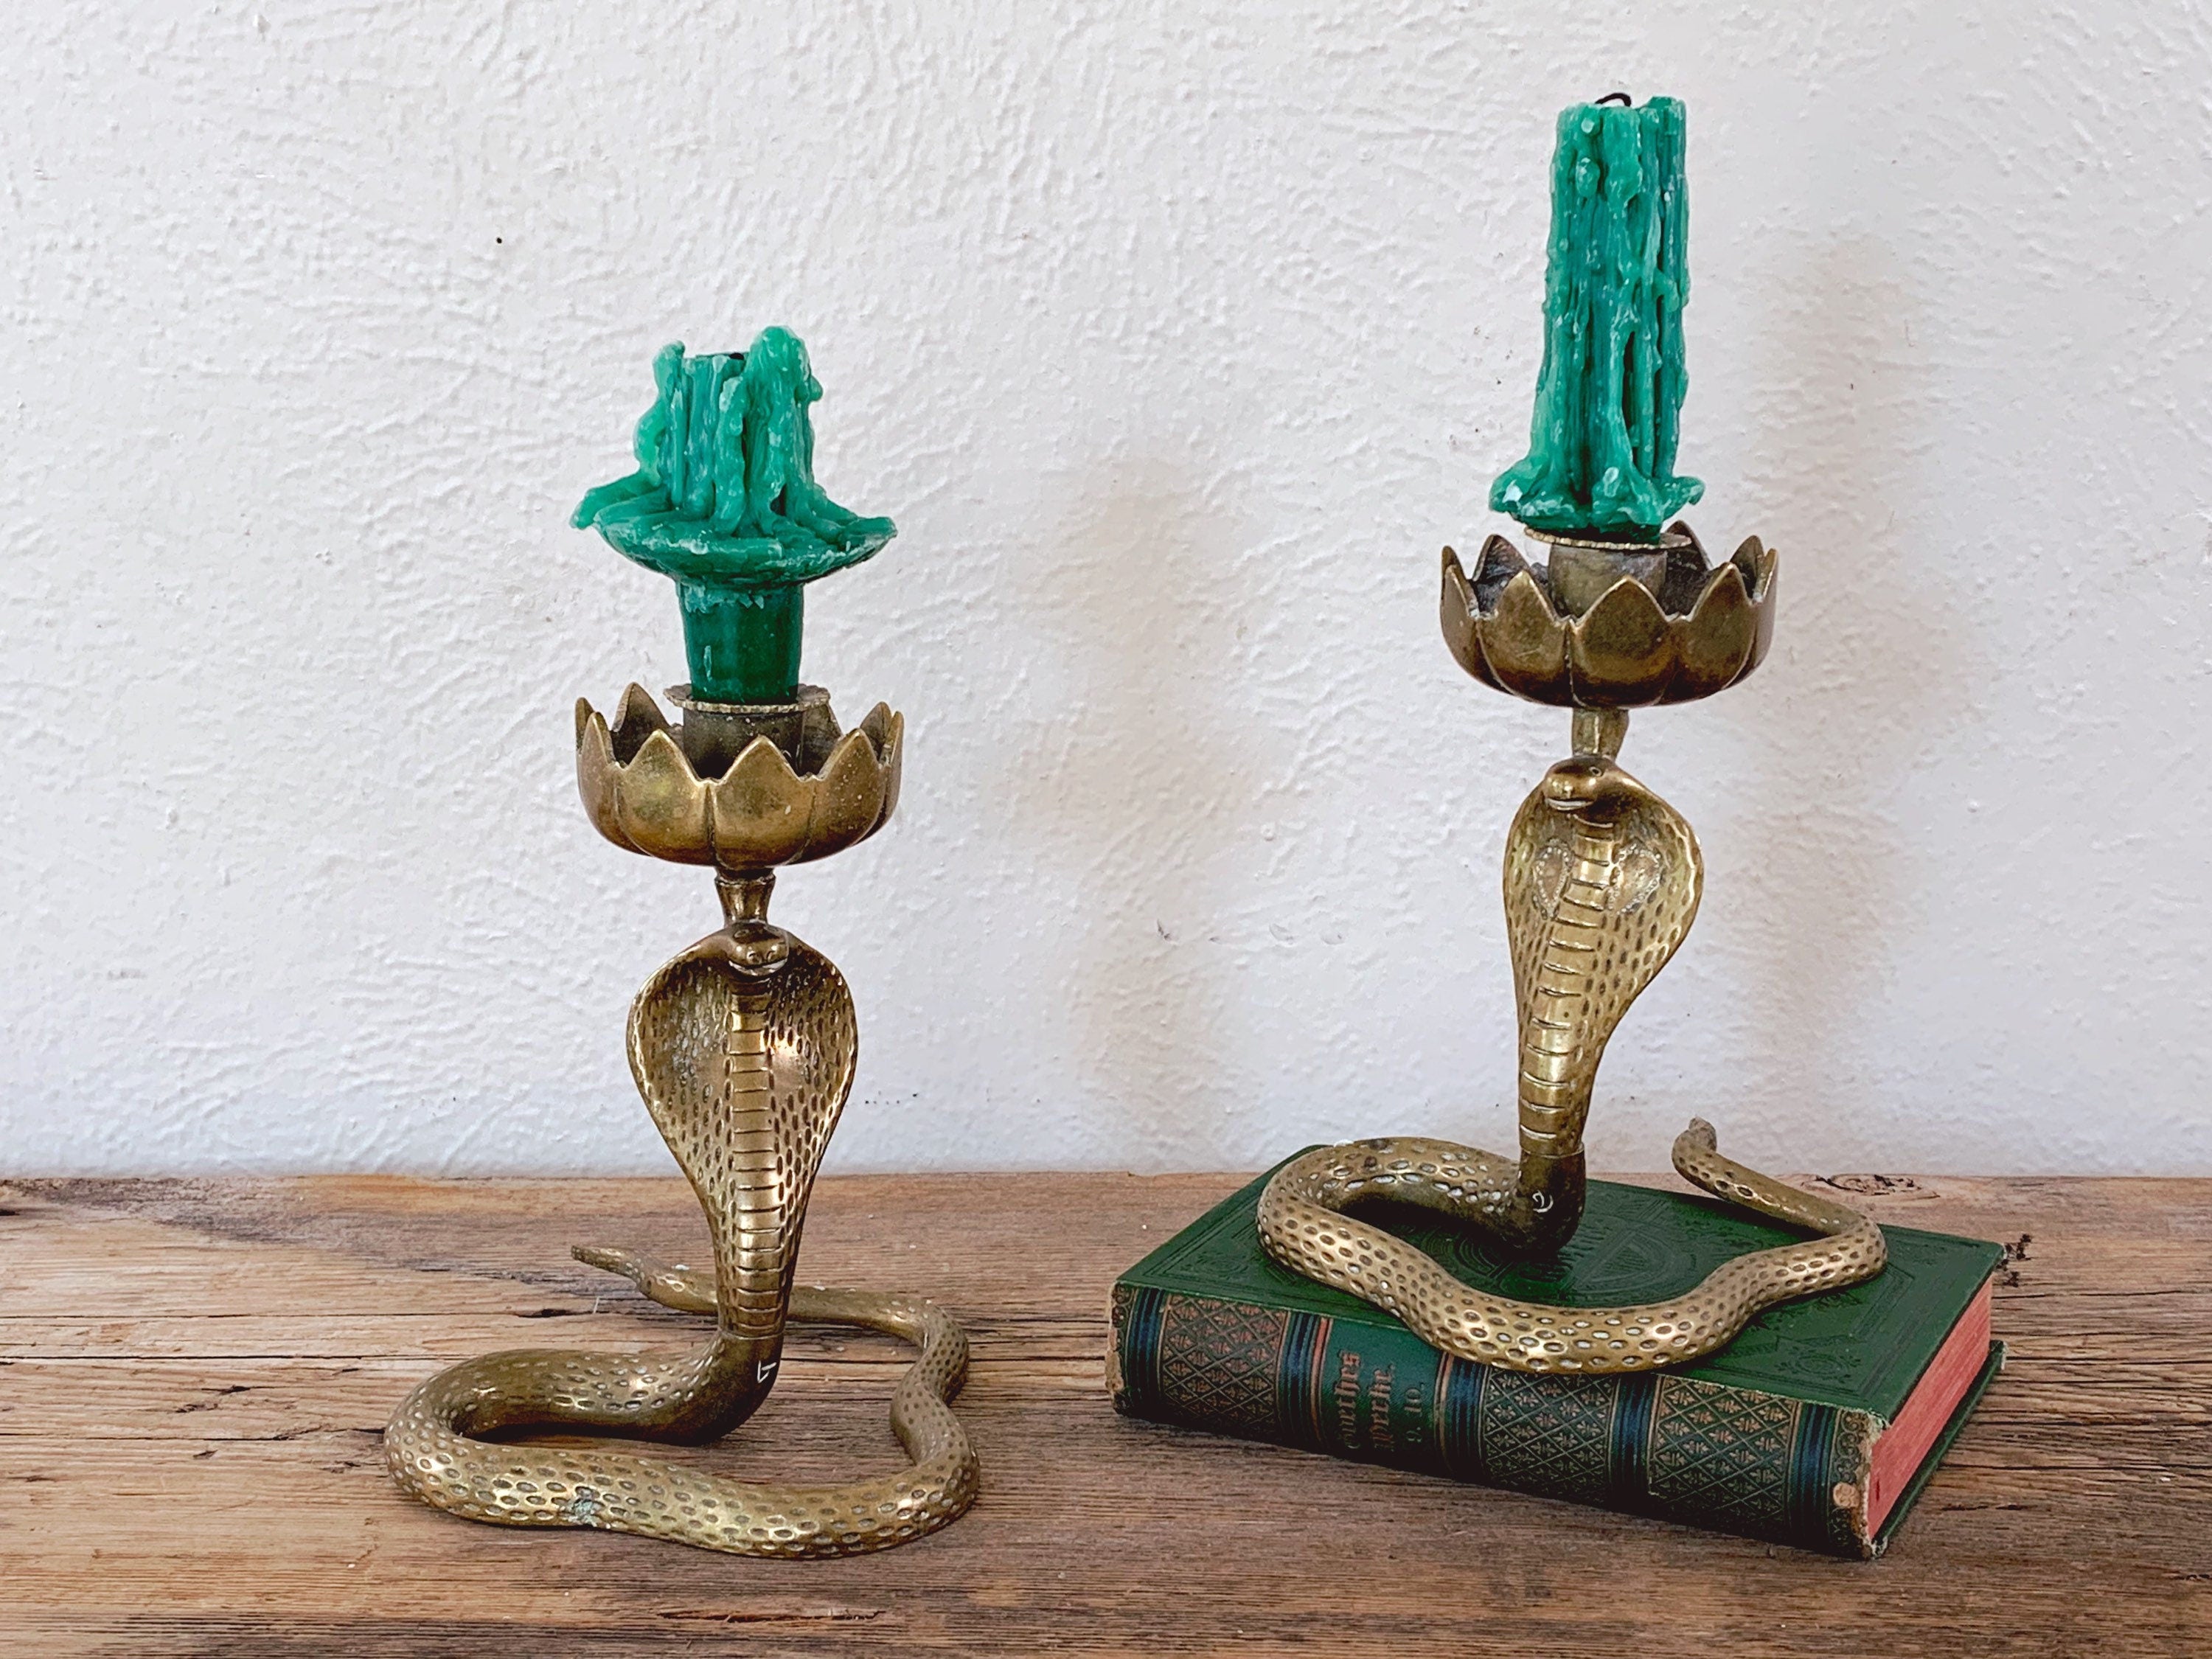 Pair of Vintage Brass Hand Engraved Cobra Snake Candle Holders | Engraved Serpent Candlestick Holder Unique Boho Home Decor